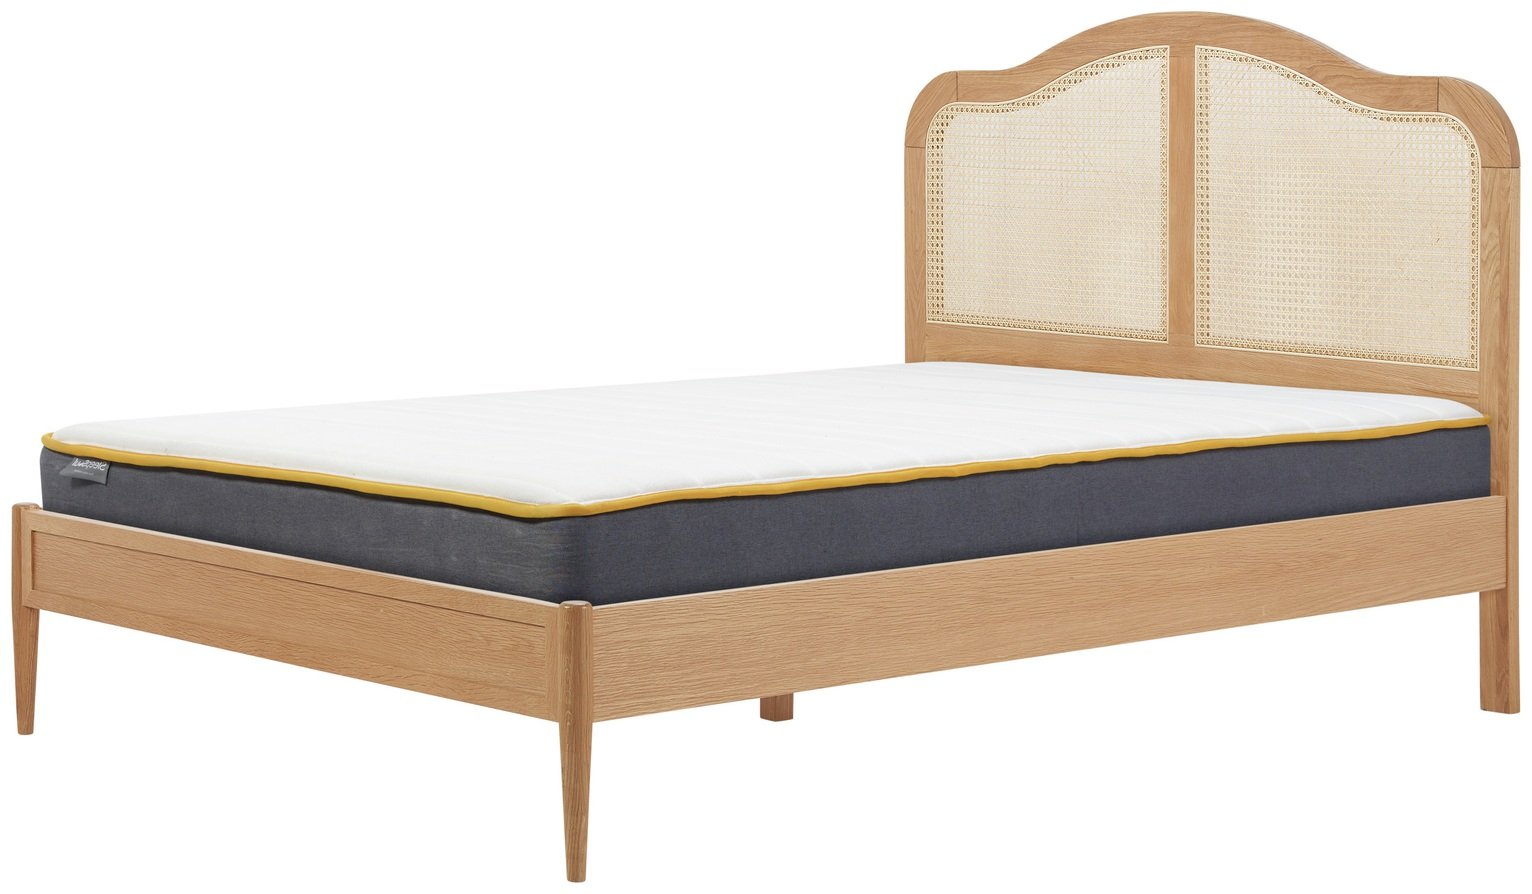 Birlea Leonie Double Rattan Bed Frame - Oak